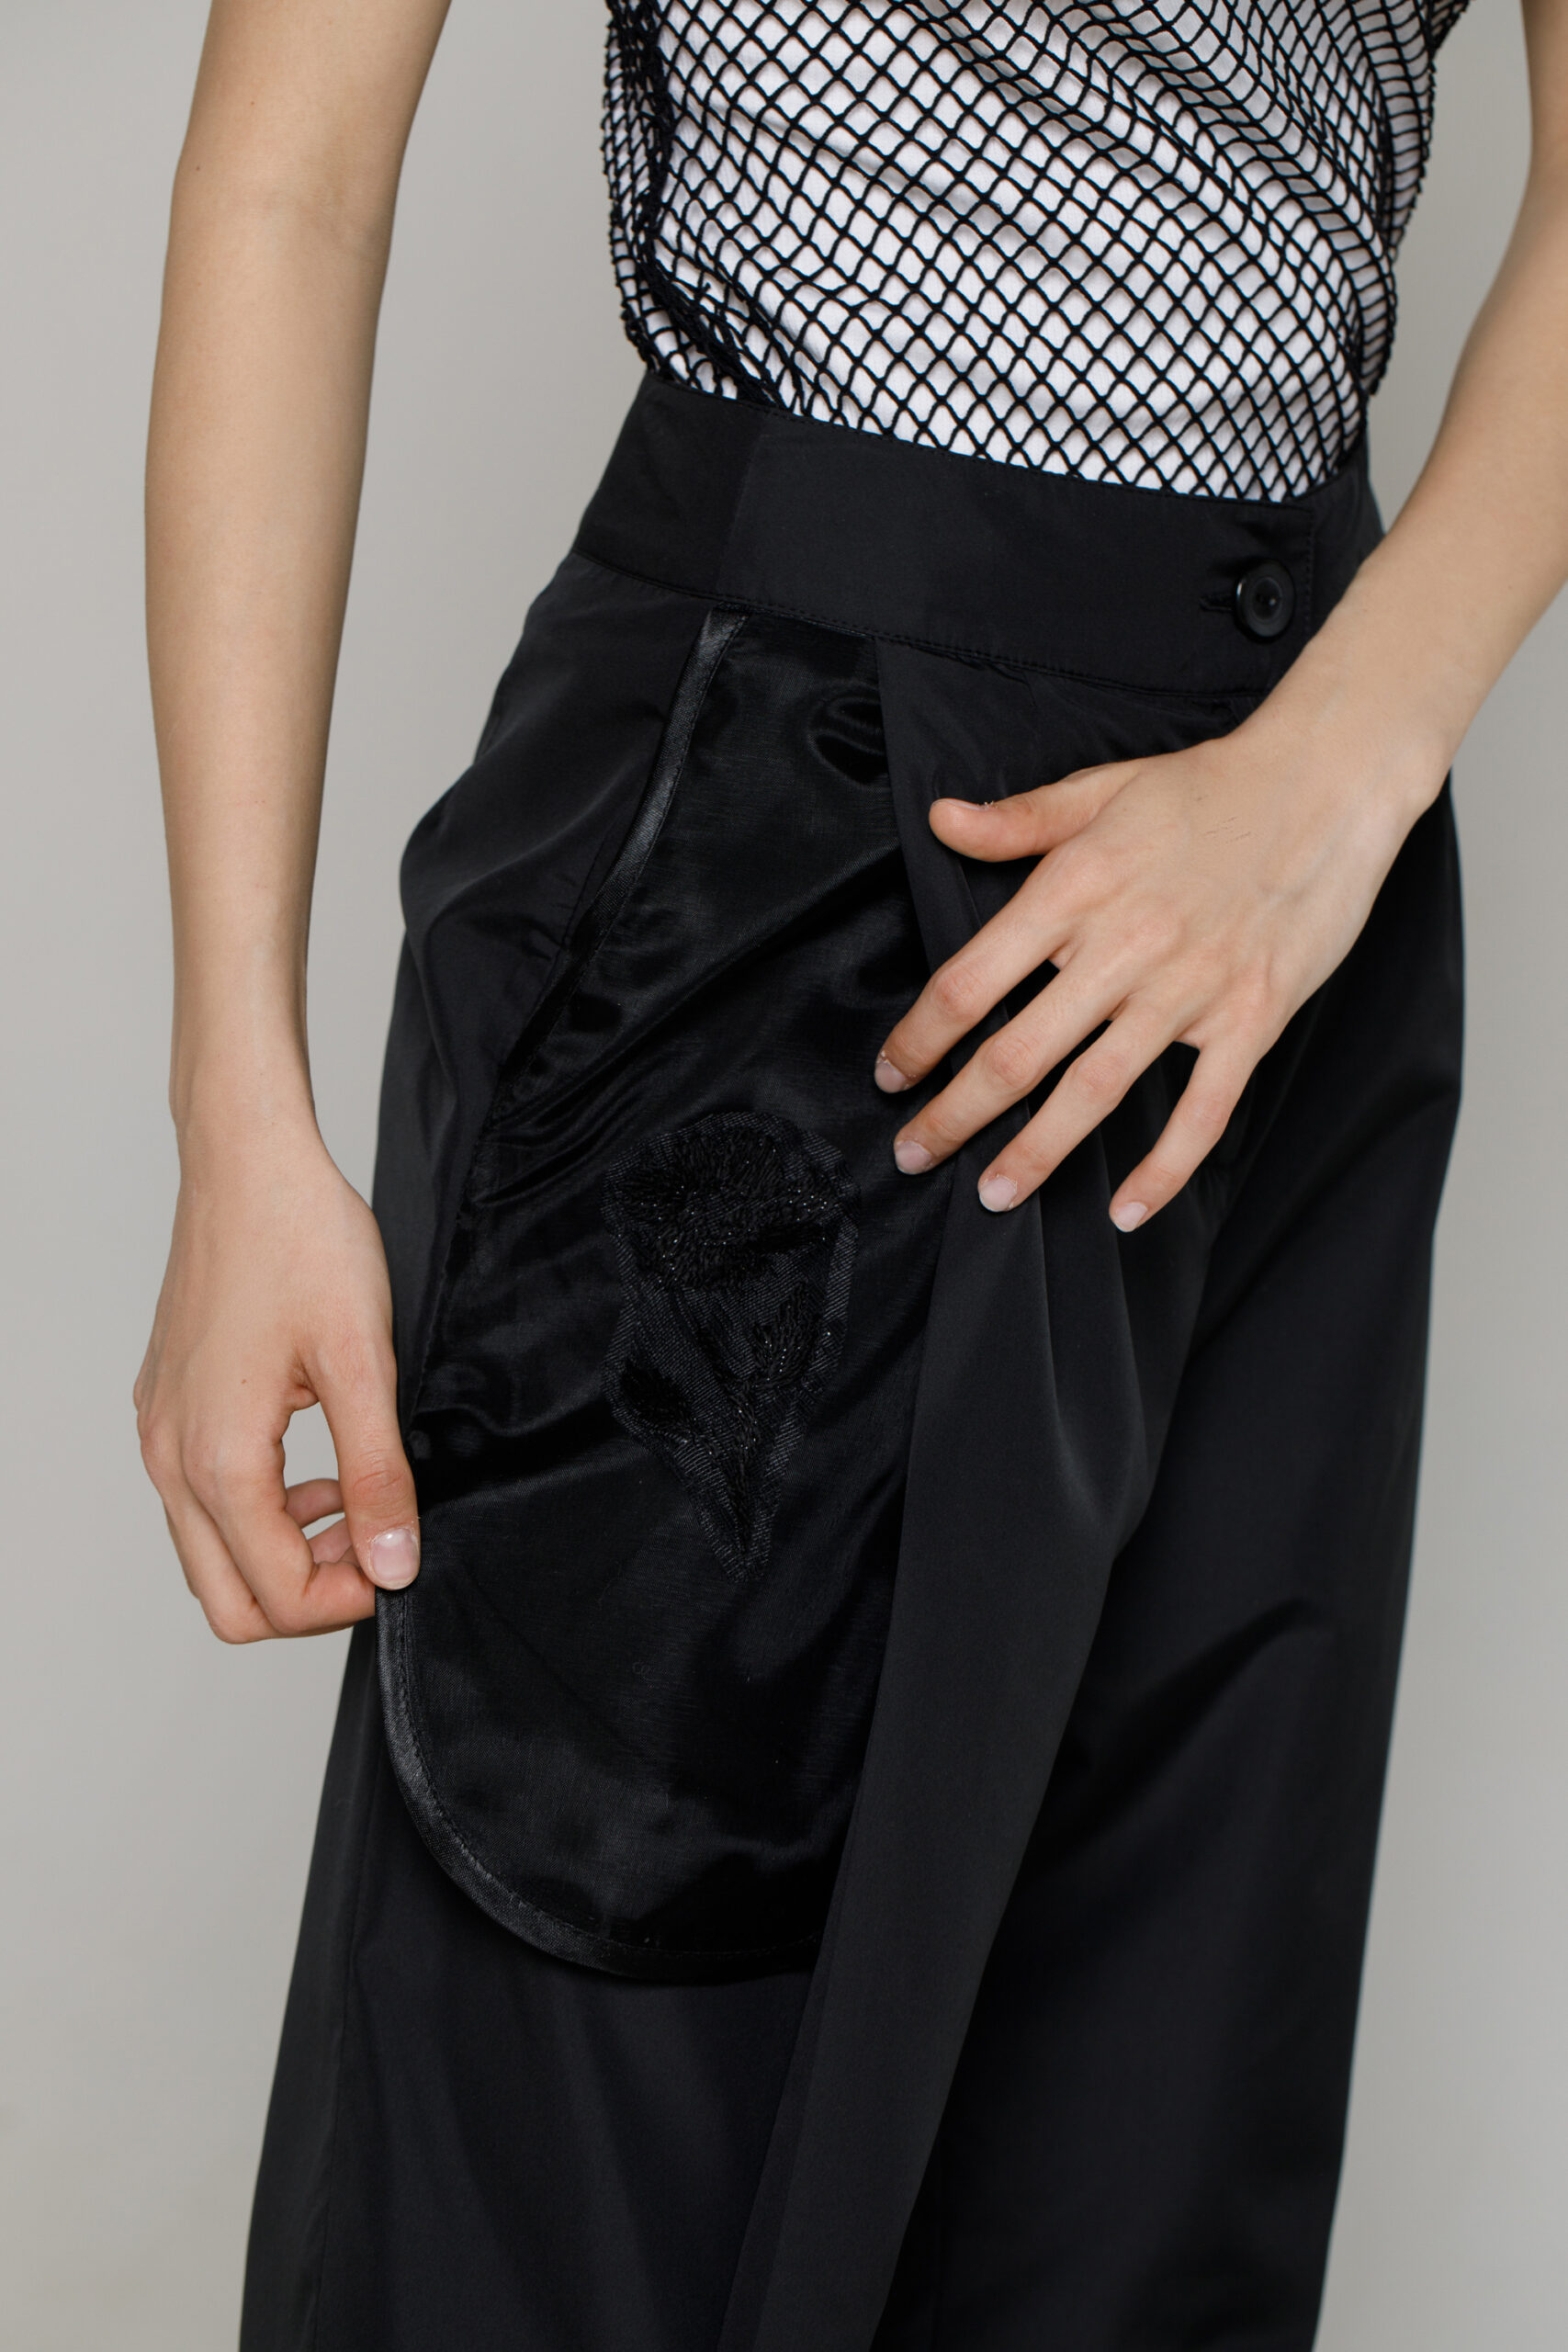 ROCO Elegant black pants made of viscose and organza. Natural fabrics, original design, handmade embroidery